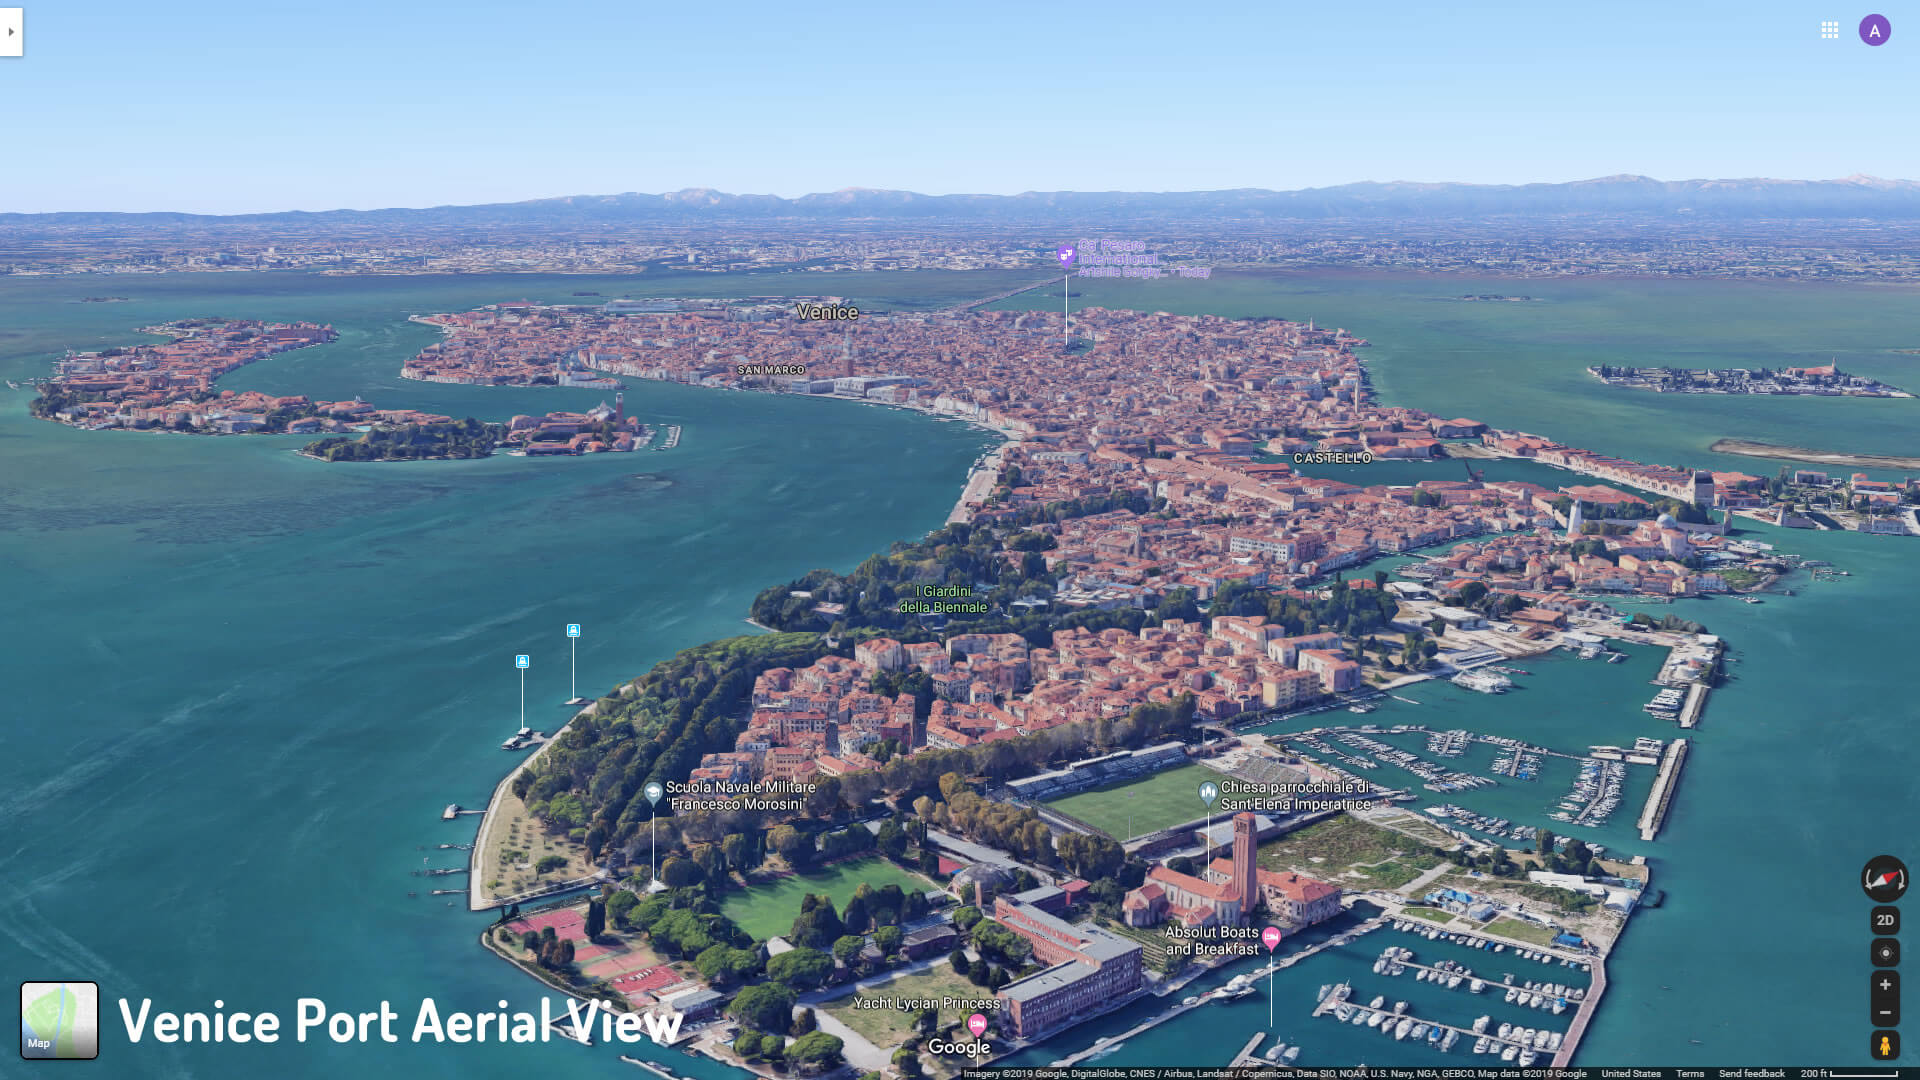 Venice Port Aerial View